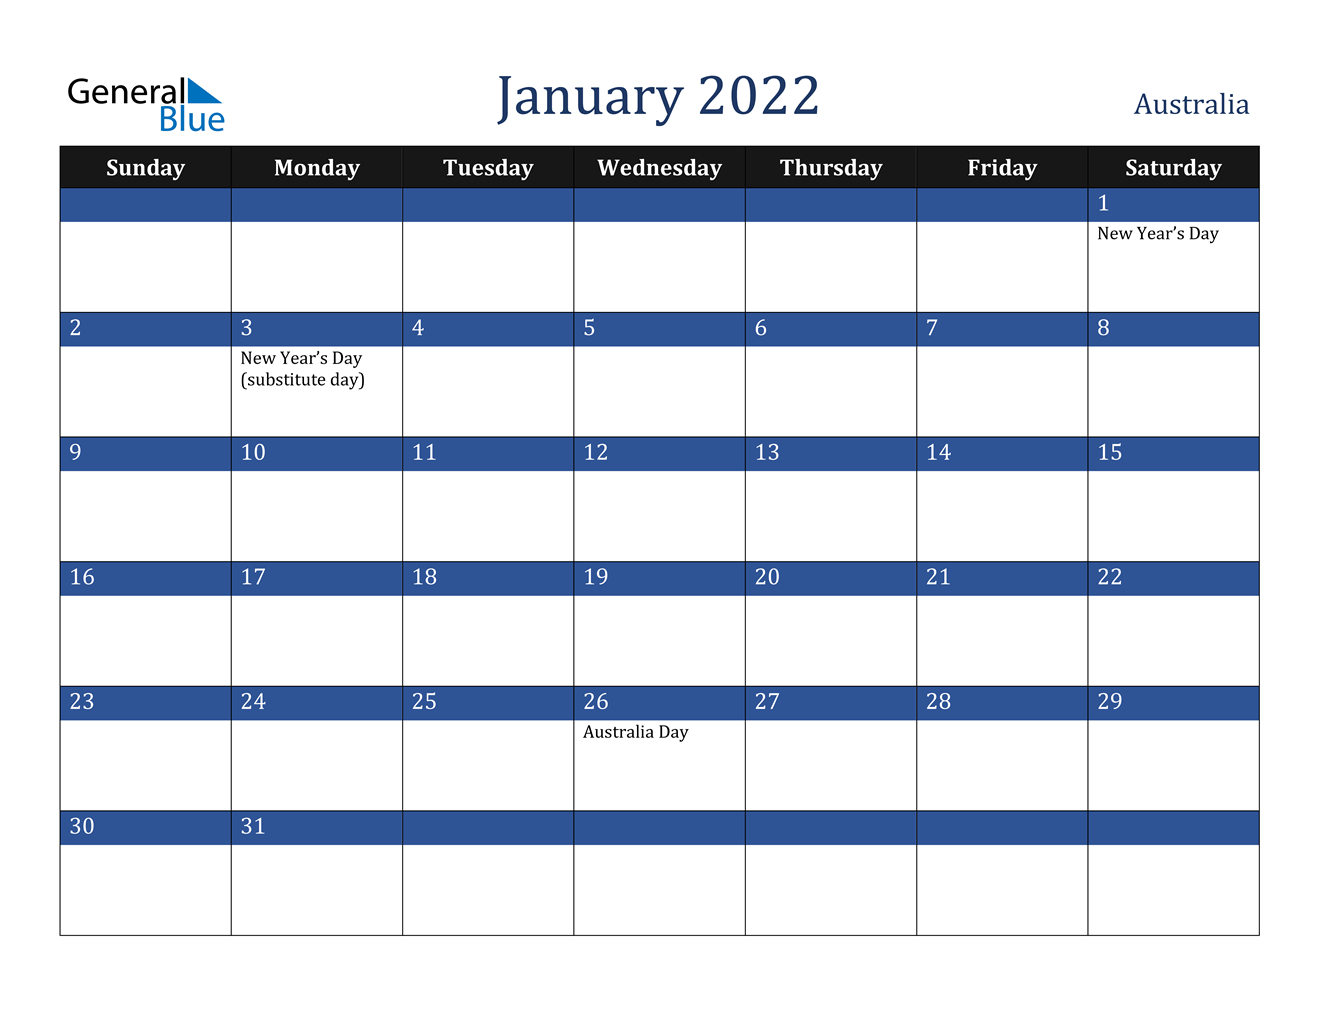 January 2022 Calendar - Australia